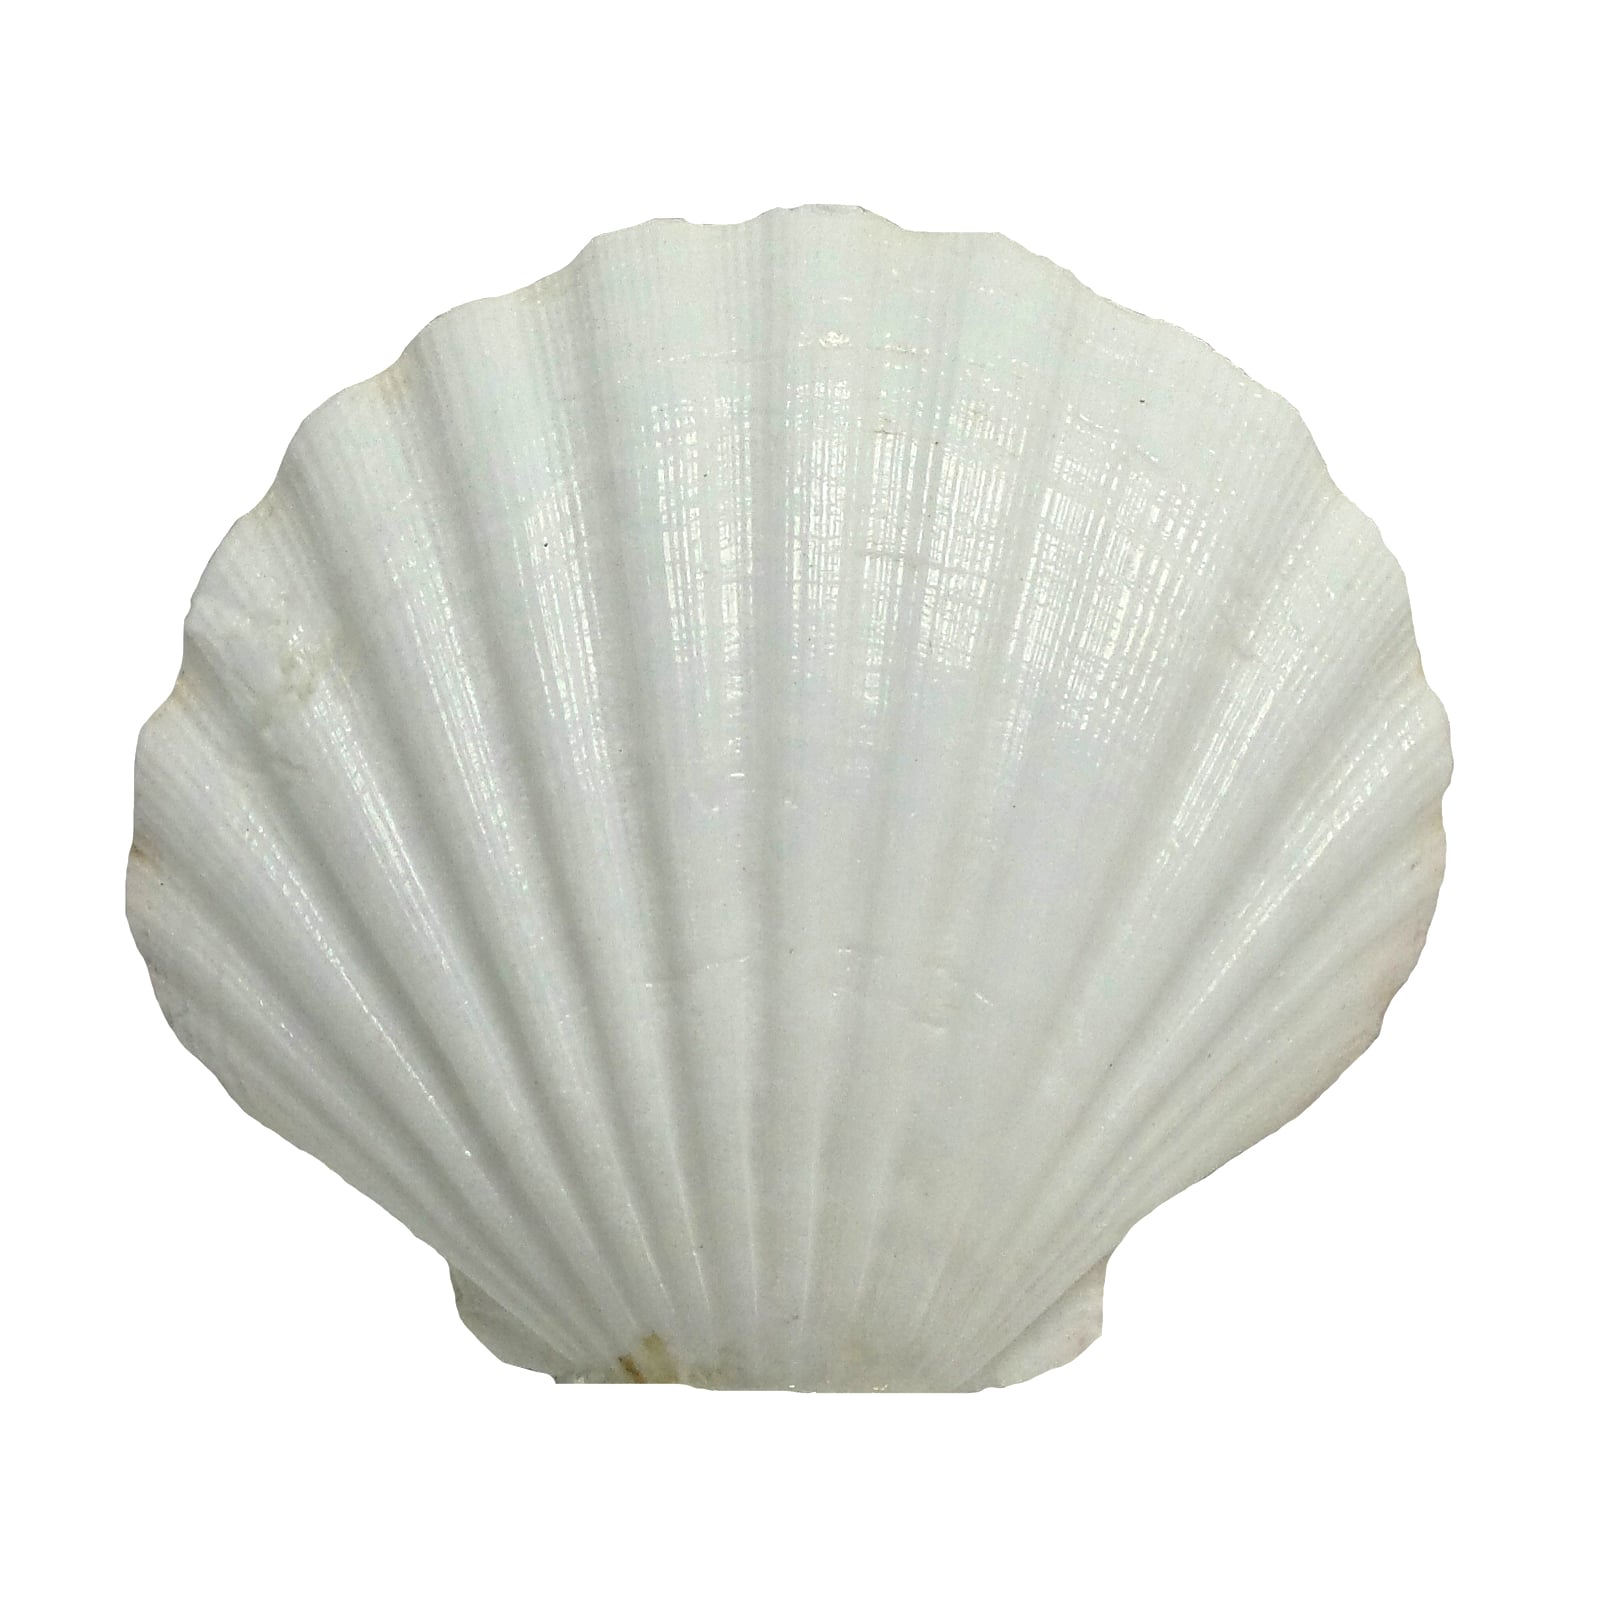 Irish Deep Baking Scallop Shell 4-4.5 - Seashell Supplies - Scallop  Shells Crafts - Irish Baking Shells - Wedding Decor - FREE SHIPPING!